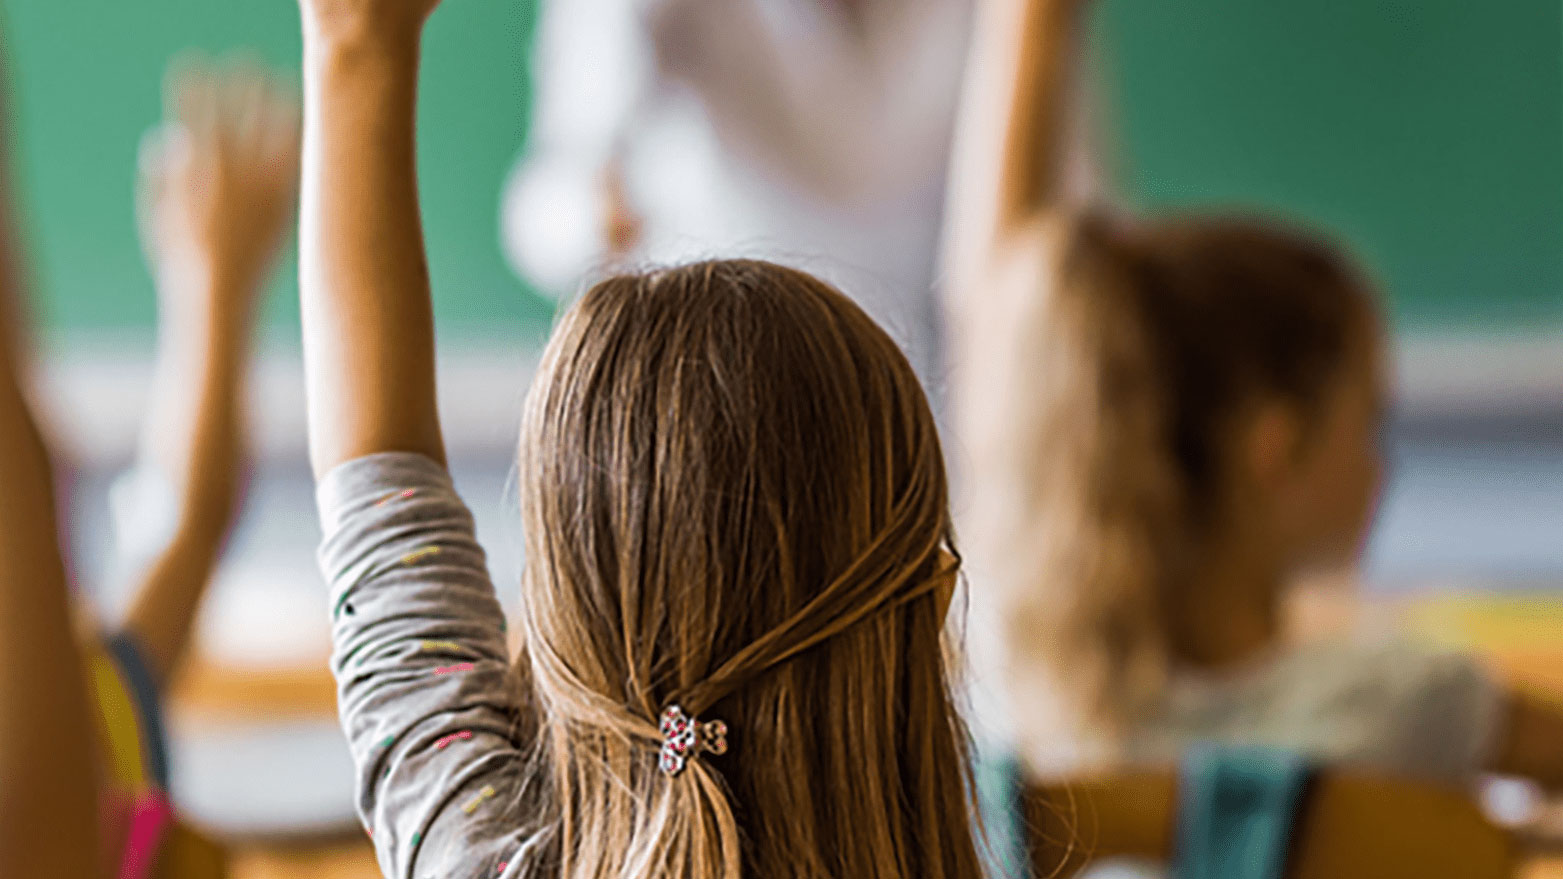 Elementary schoolchildren raise their hands in a classroom